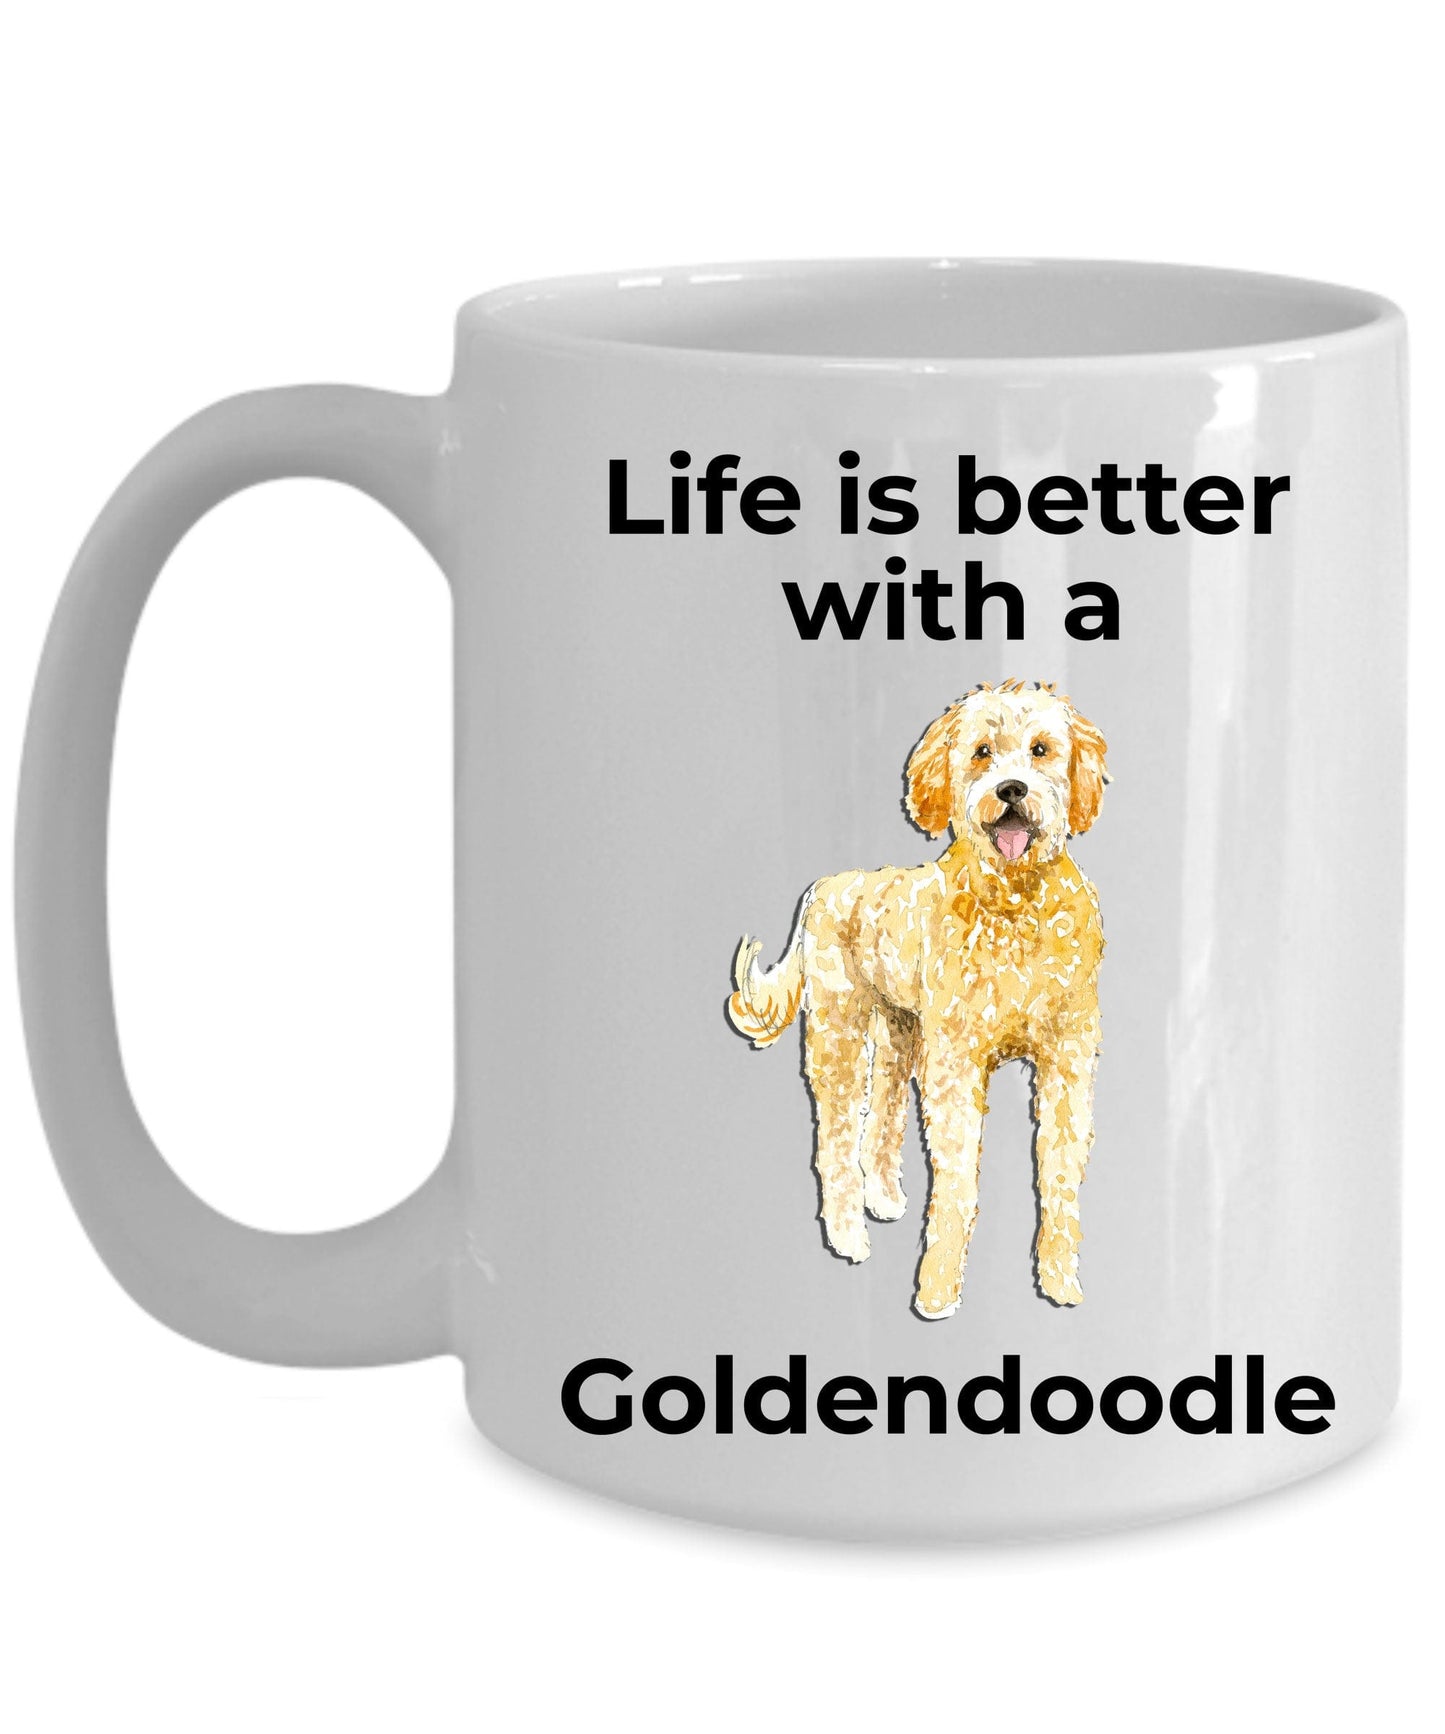 Goldendoodle Dog Coffee Mug - Life is Better